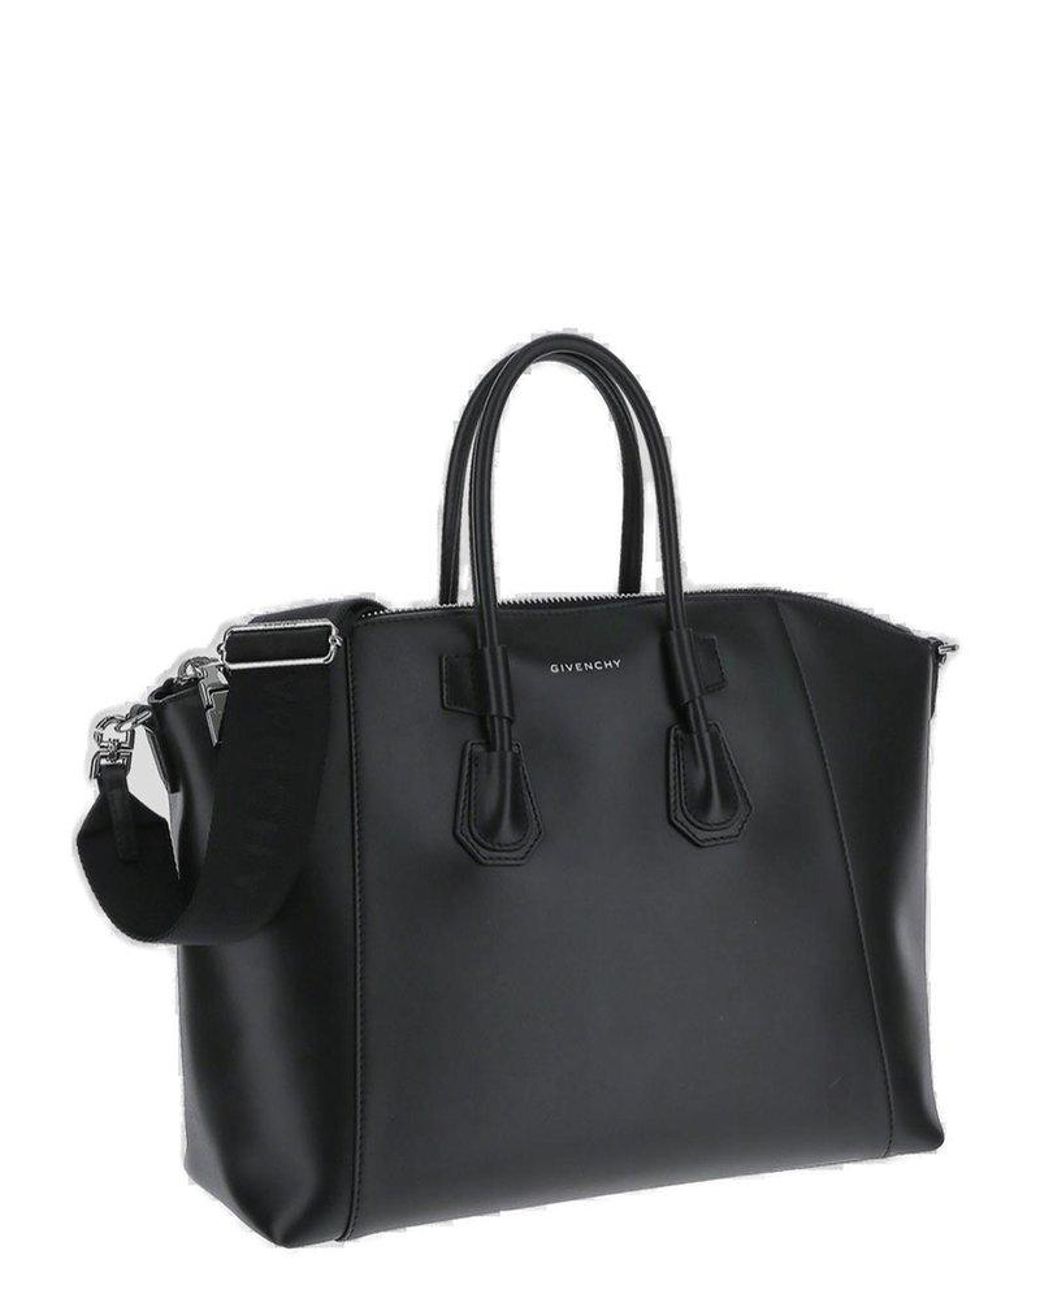 Givenchy Leather Antigona Bag in Black - Save 26% | Lyst